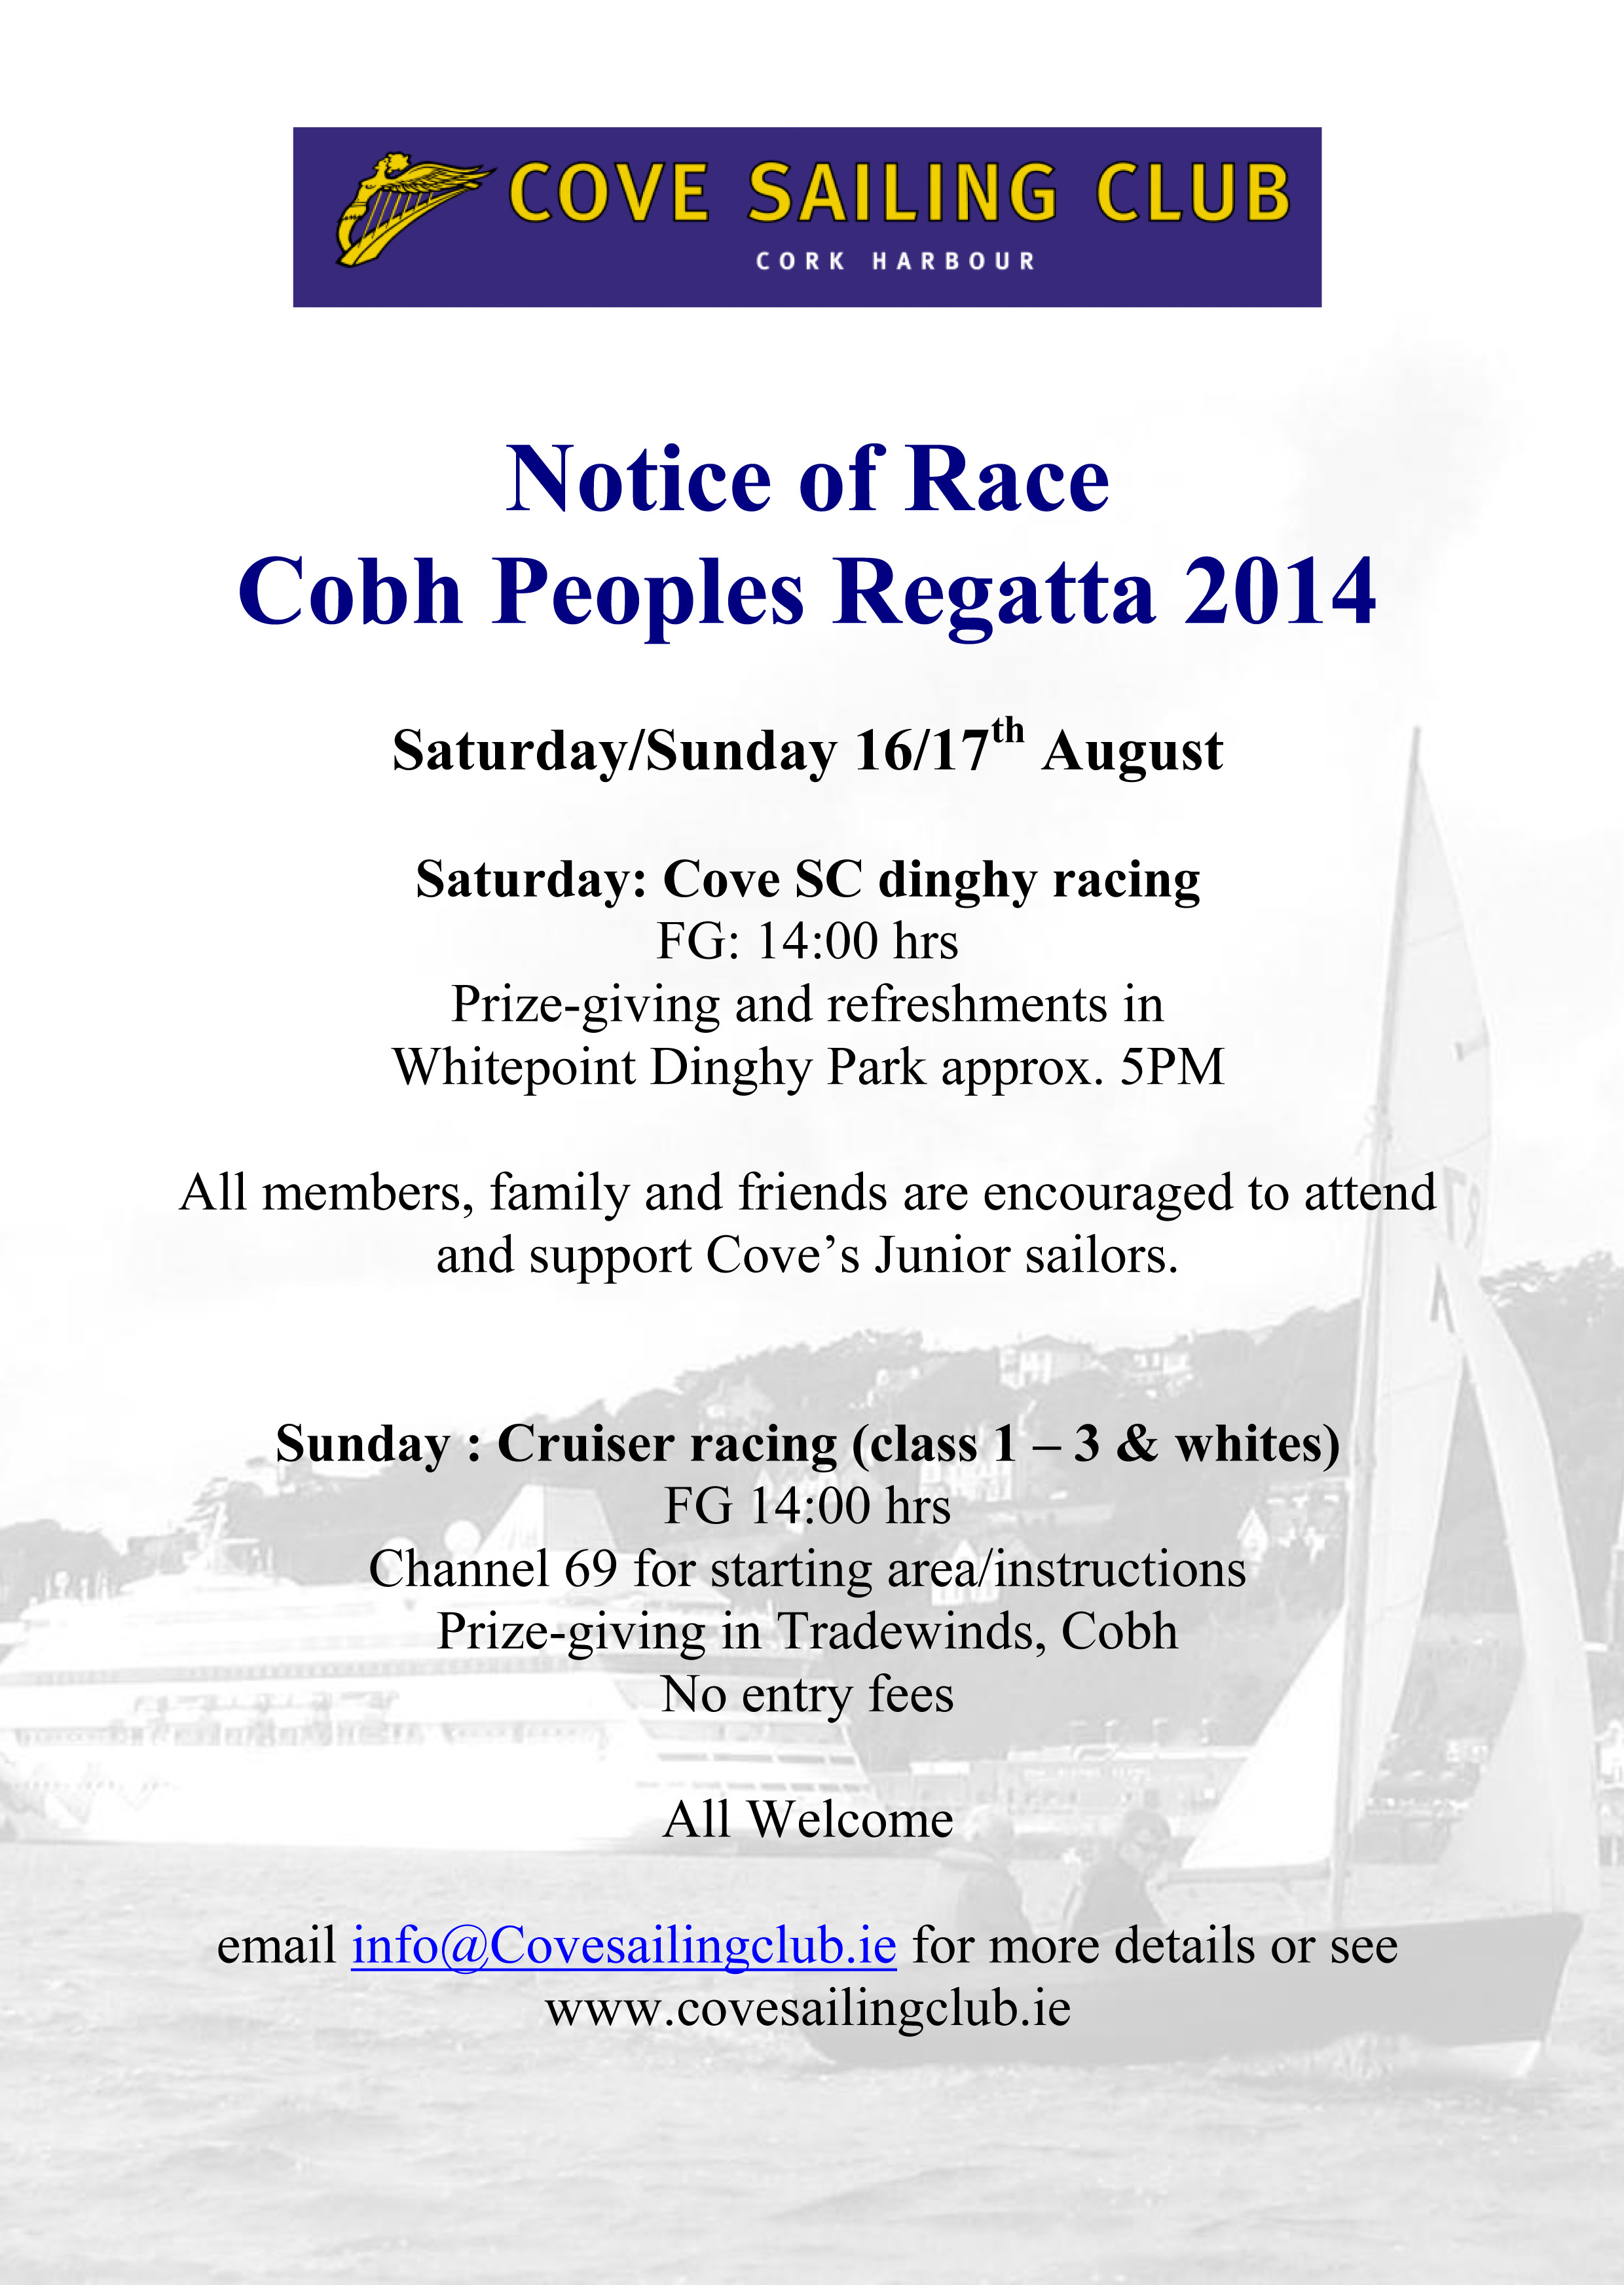 Cobh Peoples Regatta 2014 NOR